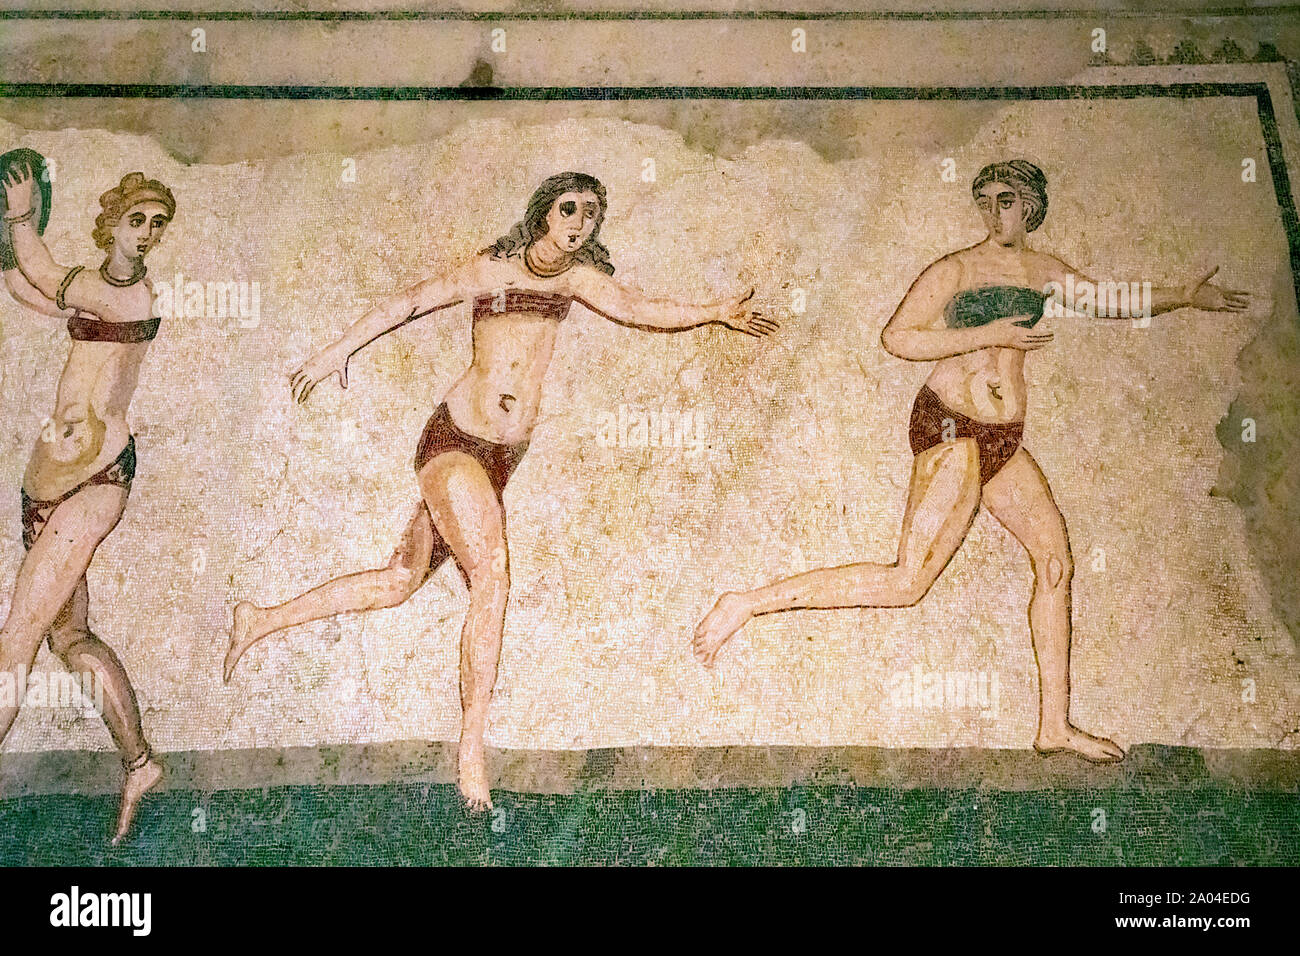 Kip Onbekwaamheid diameter Antique roman bikini mosaic in Piazza Armerina, Sicily Stock Photo - Alamy